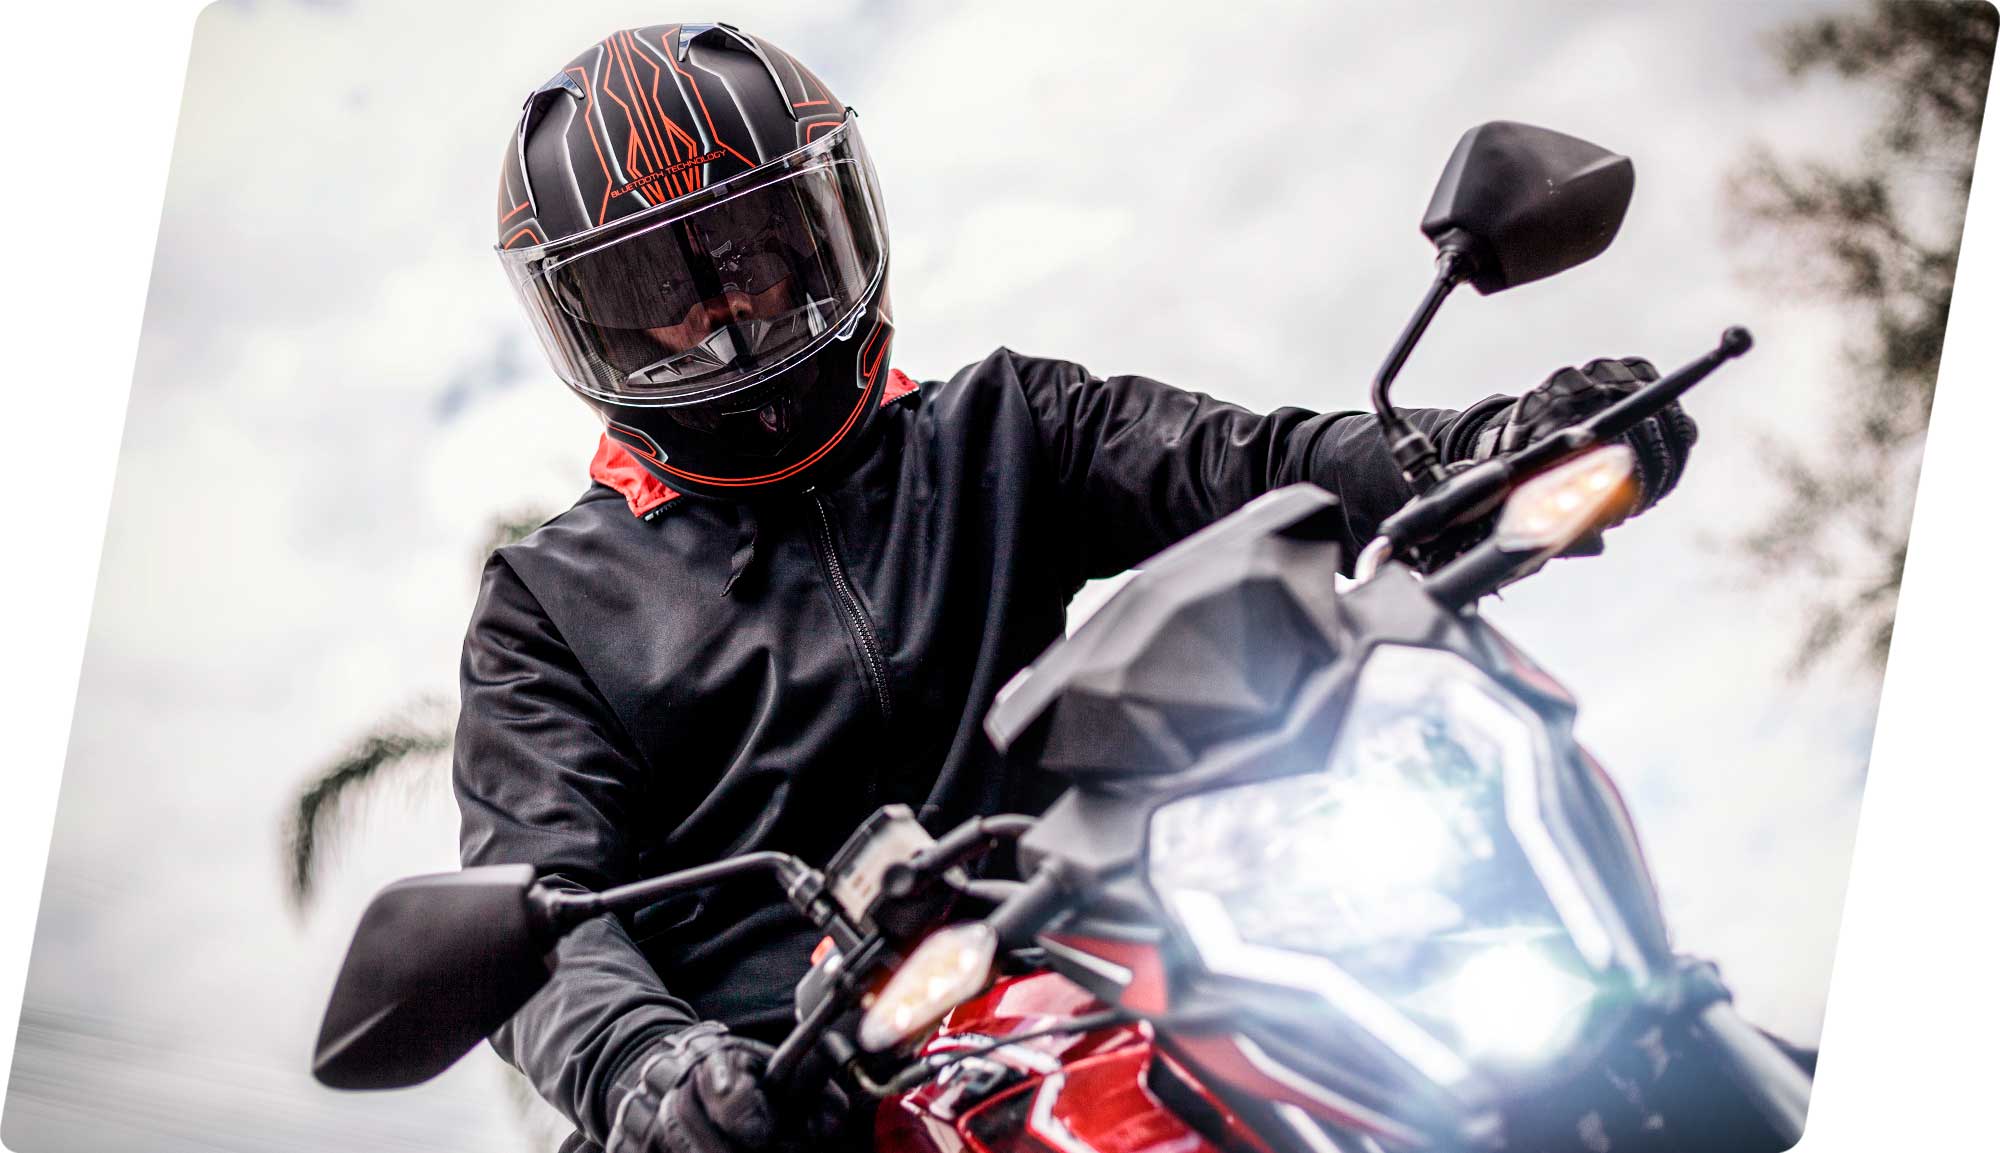 16 ideas de Casco motocicleta  casco motocicleta, cascos de moto, cascos